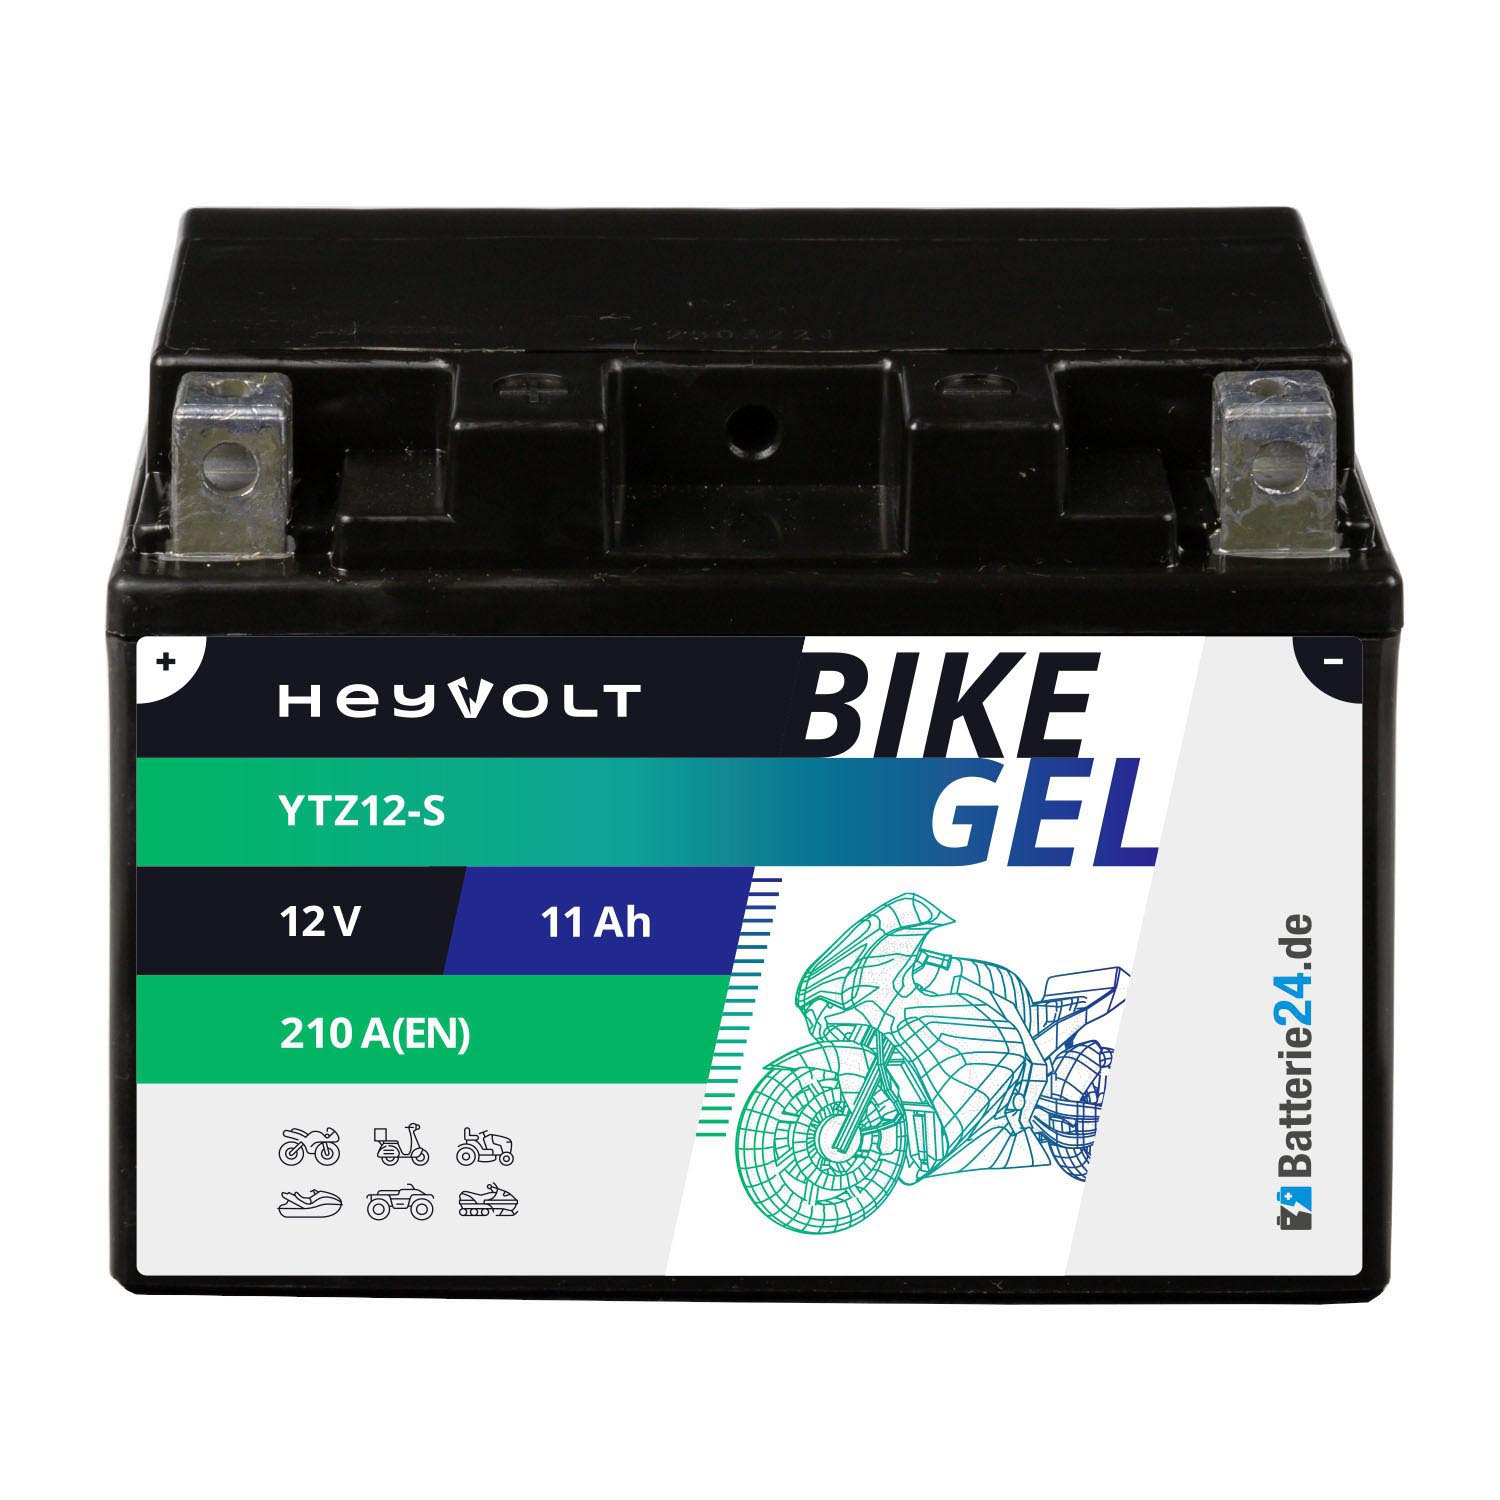 HeyVolt BIKE GEL Motorradbatterie YTZ12-S 51120 12V 11Ah